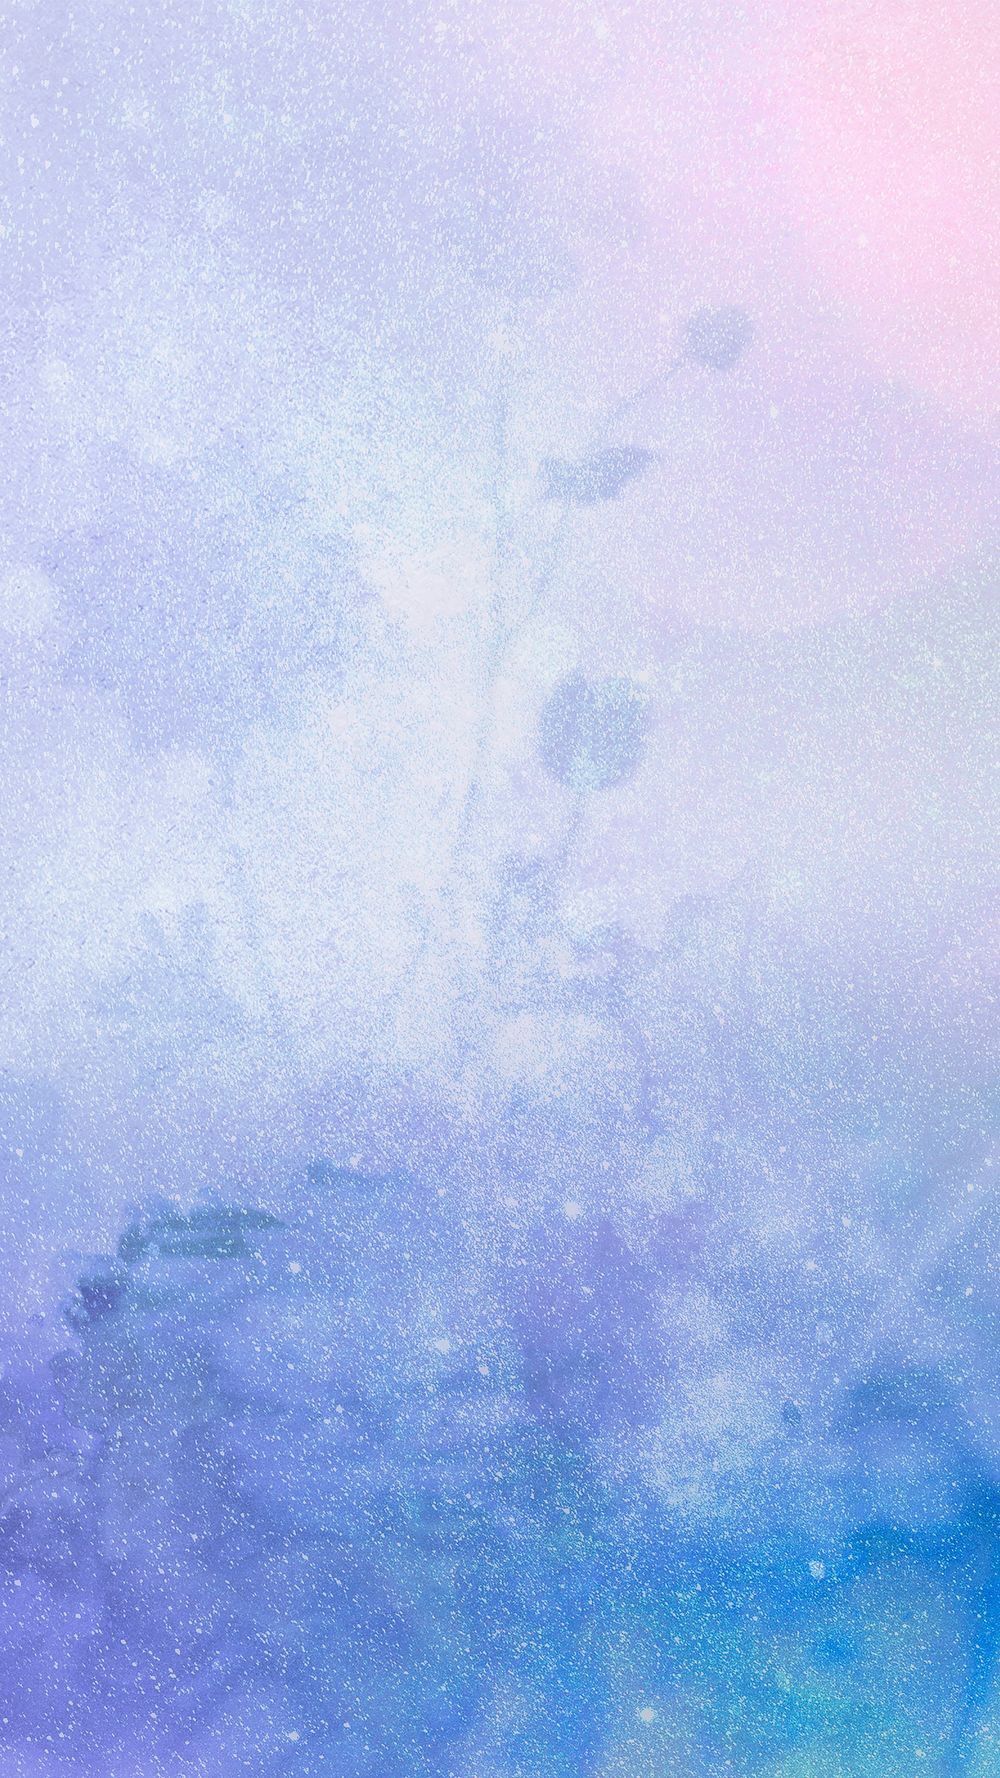 Flower phone wallpaper, grainy texture | Free Photo - rawpixel